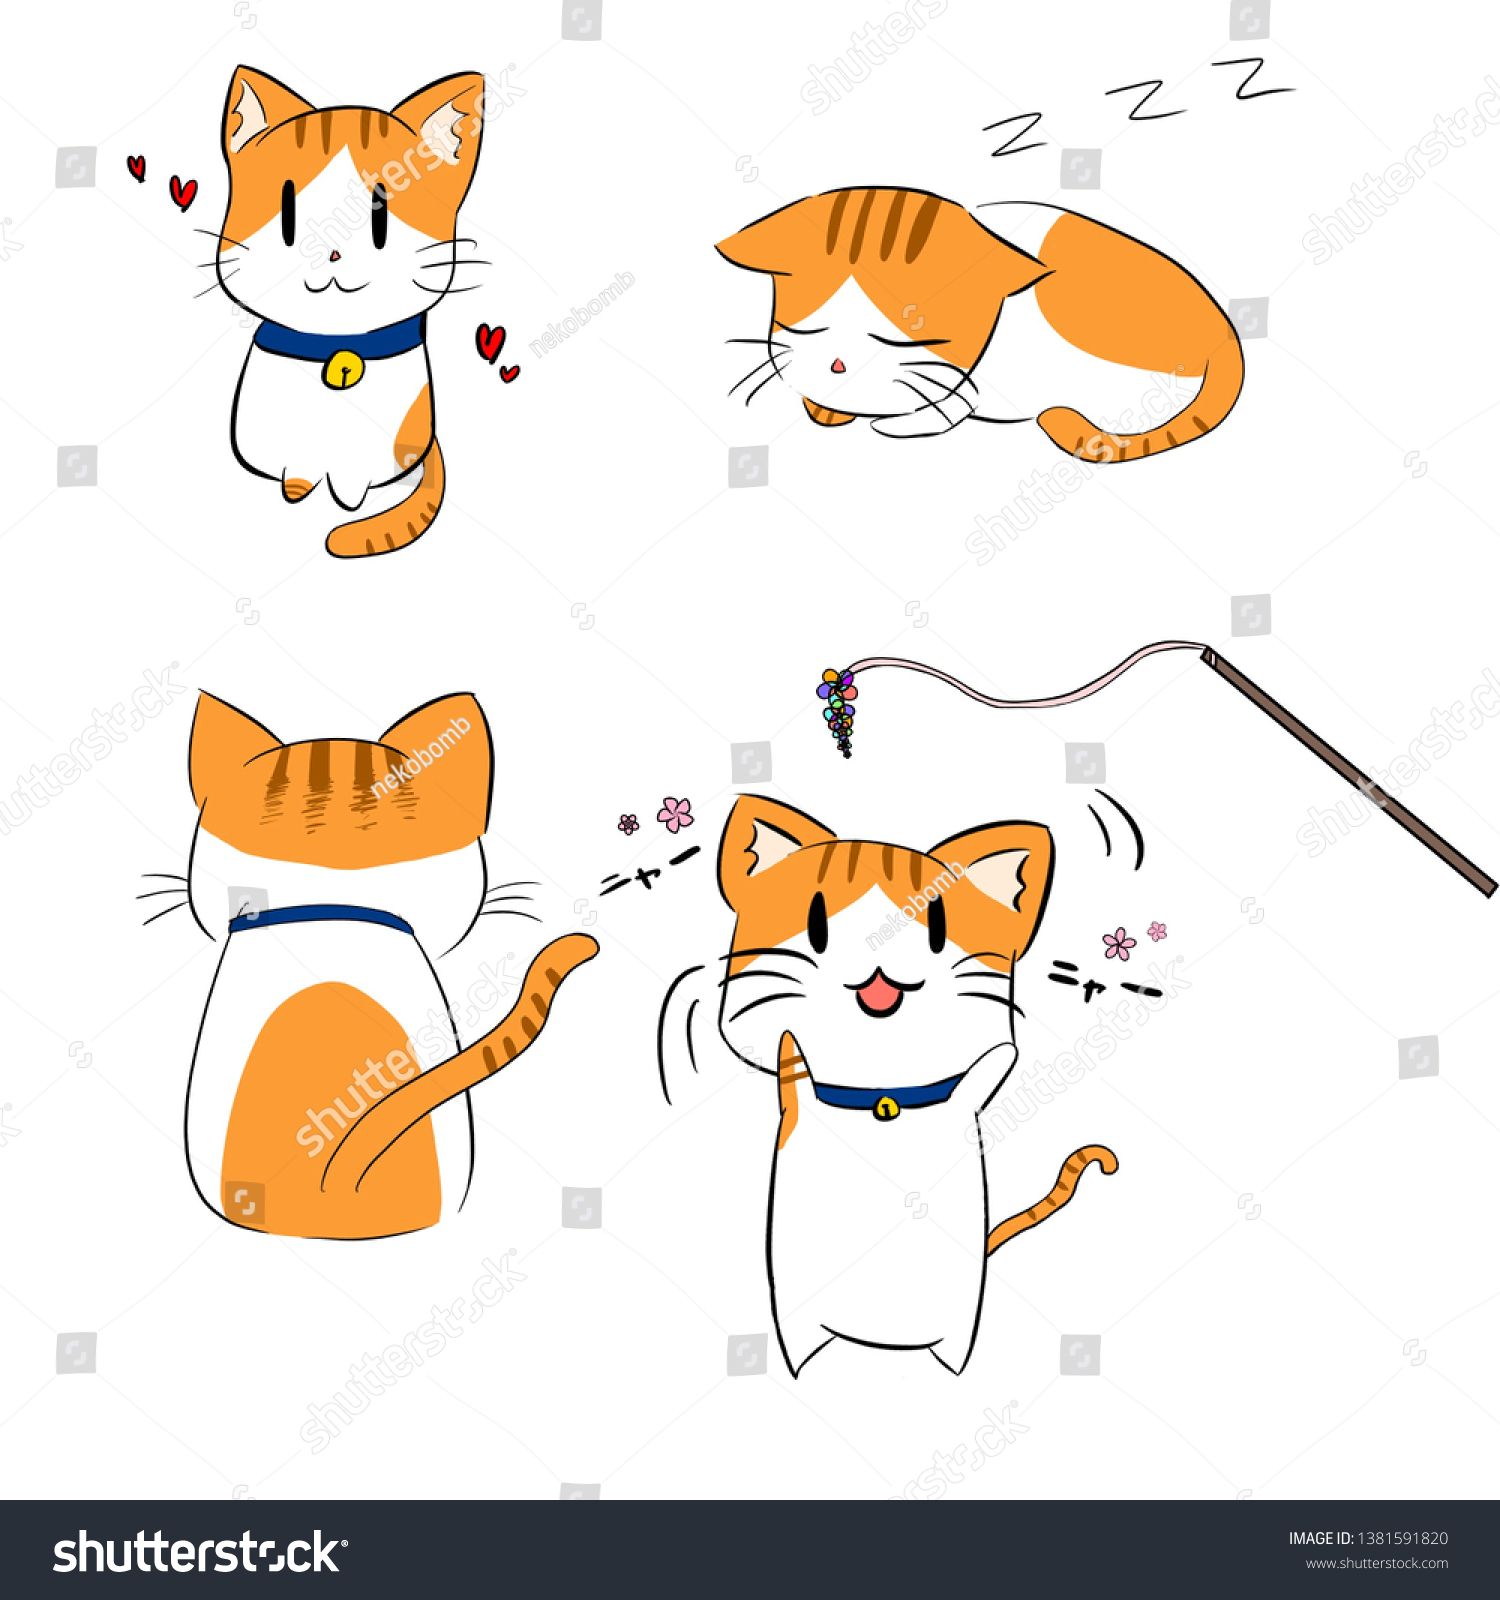 Cute Cartoon Orange Tabby Cat Character Stock Illustration Shutterstock